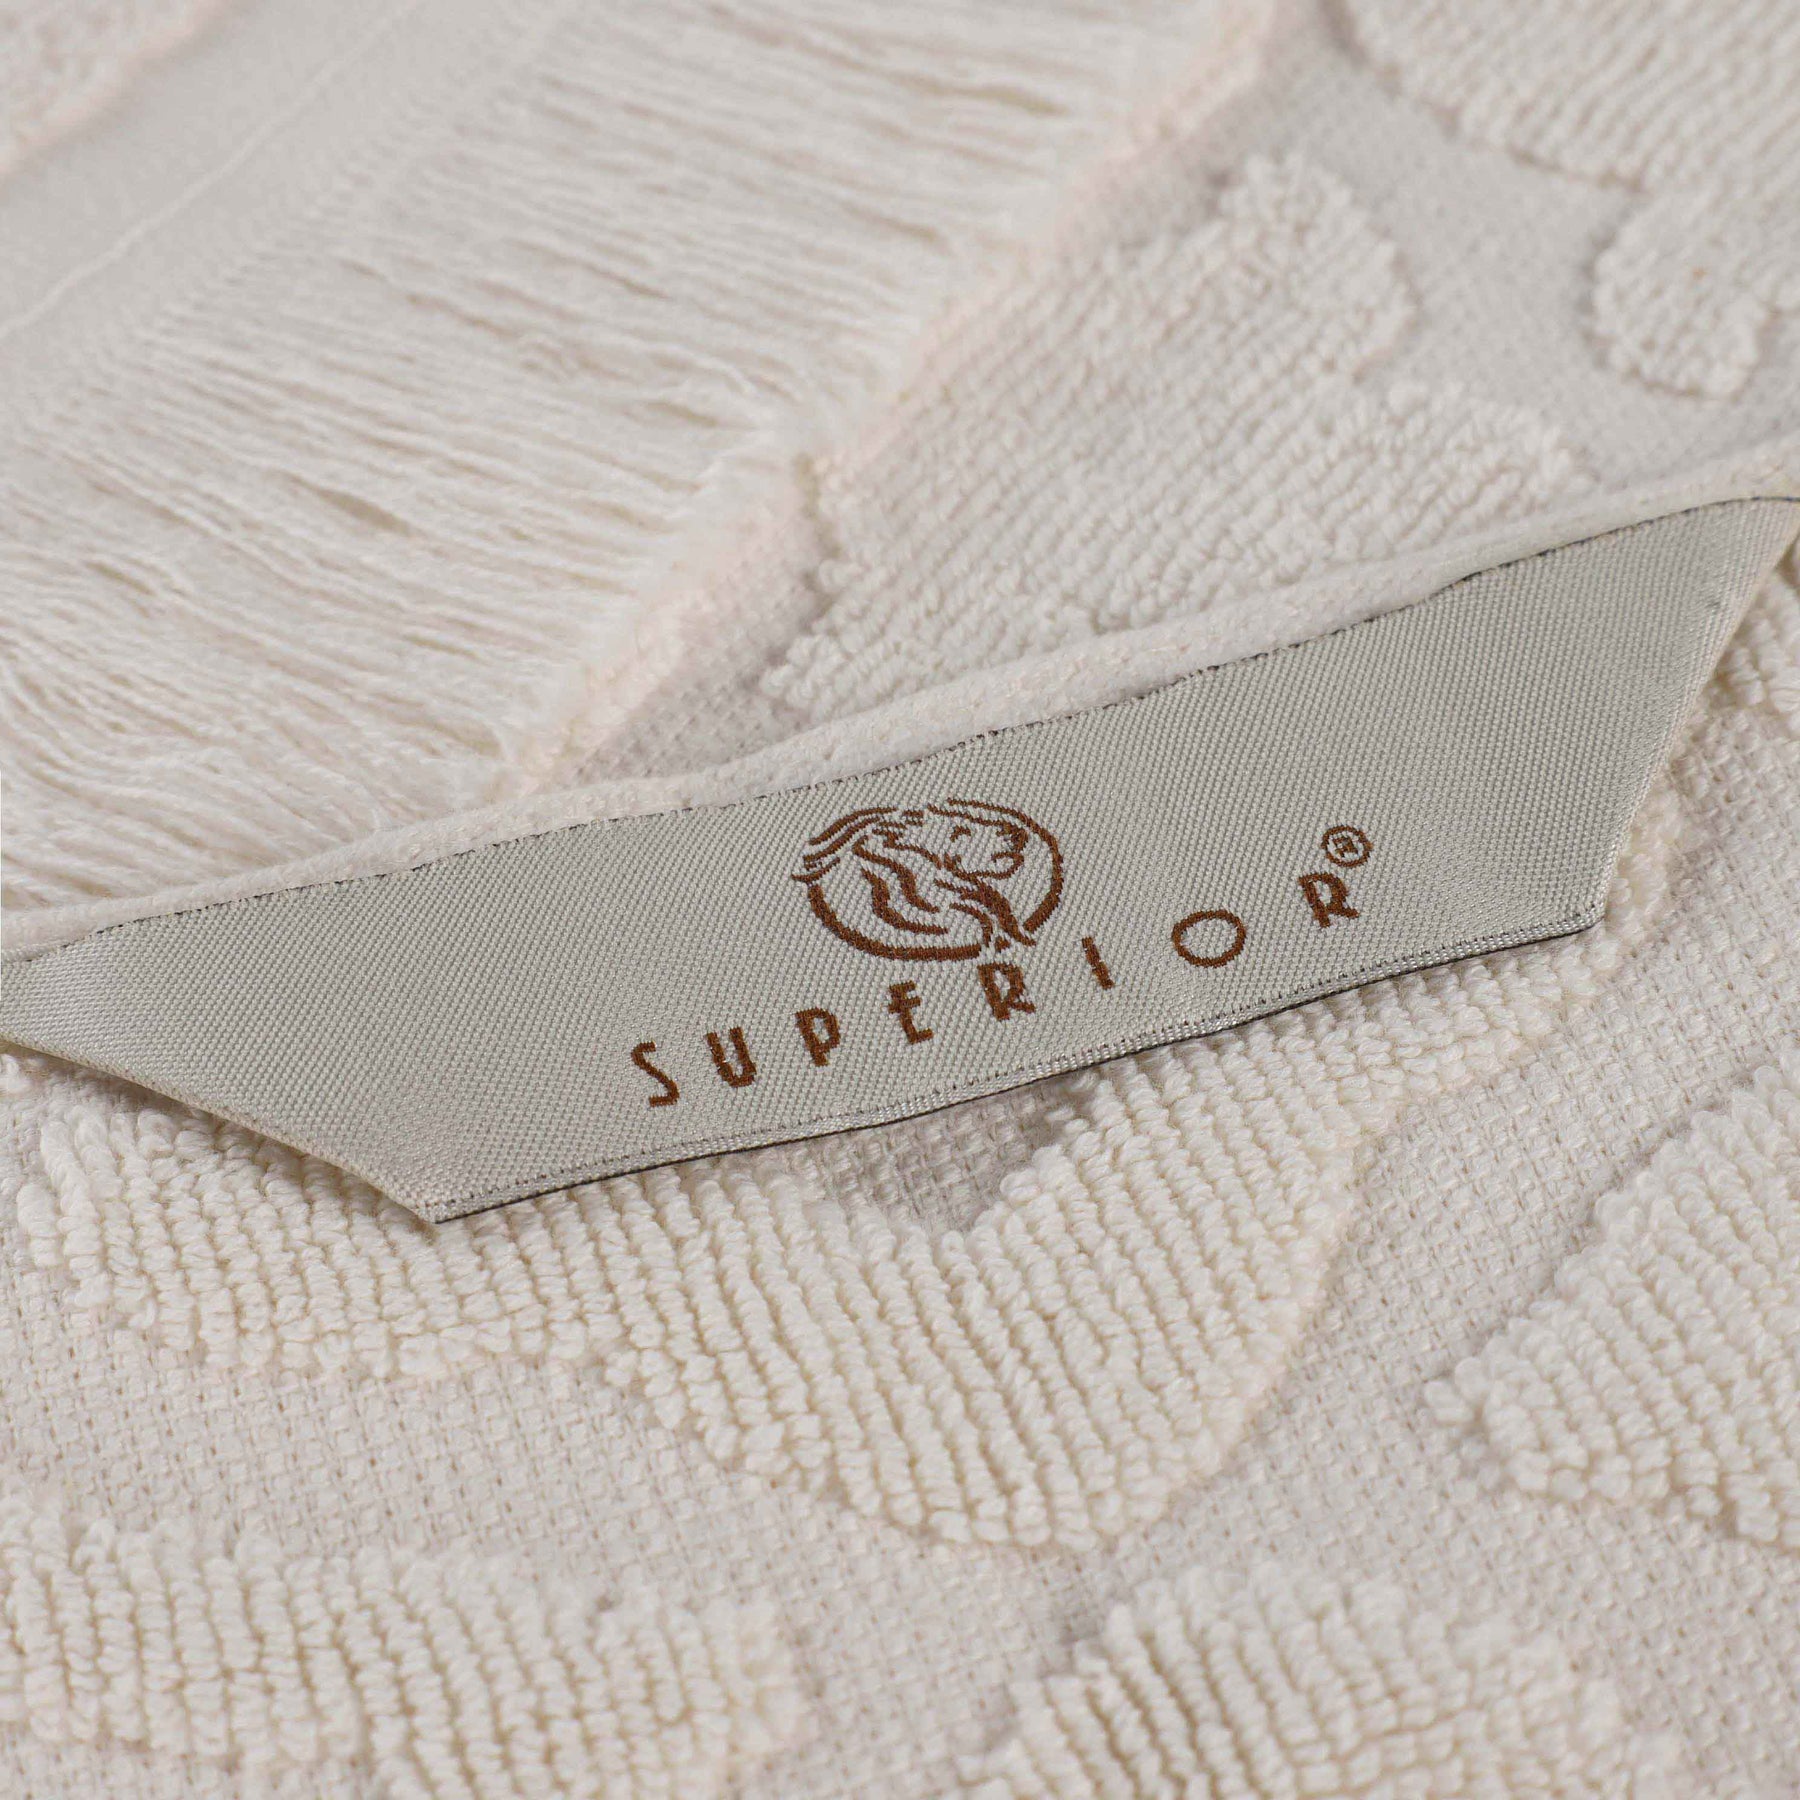 Rolla Cotton Geometric Jacquard Plush Absorbent Bath Towel - Ivory